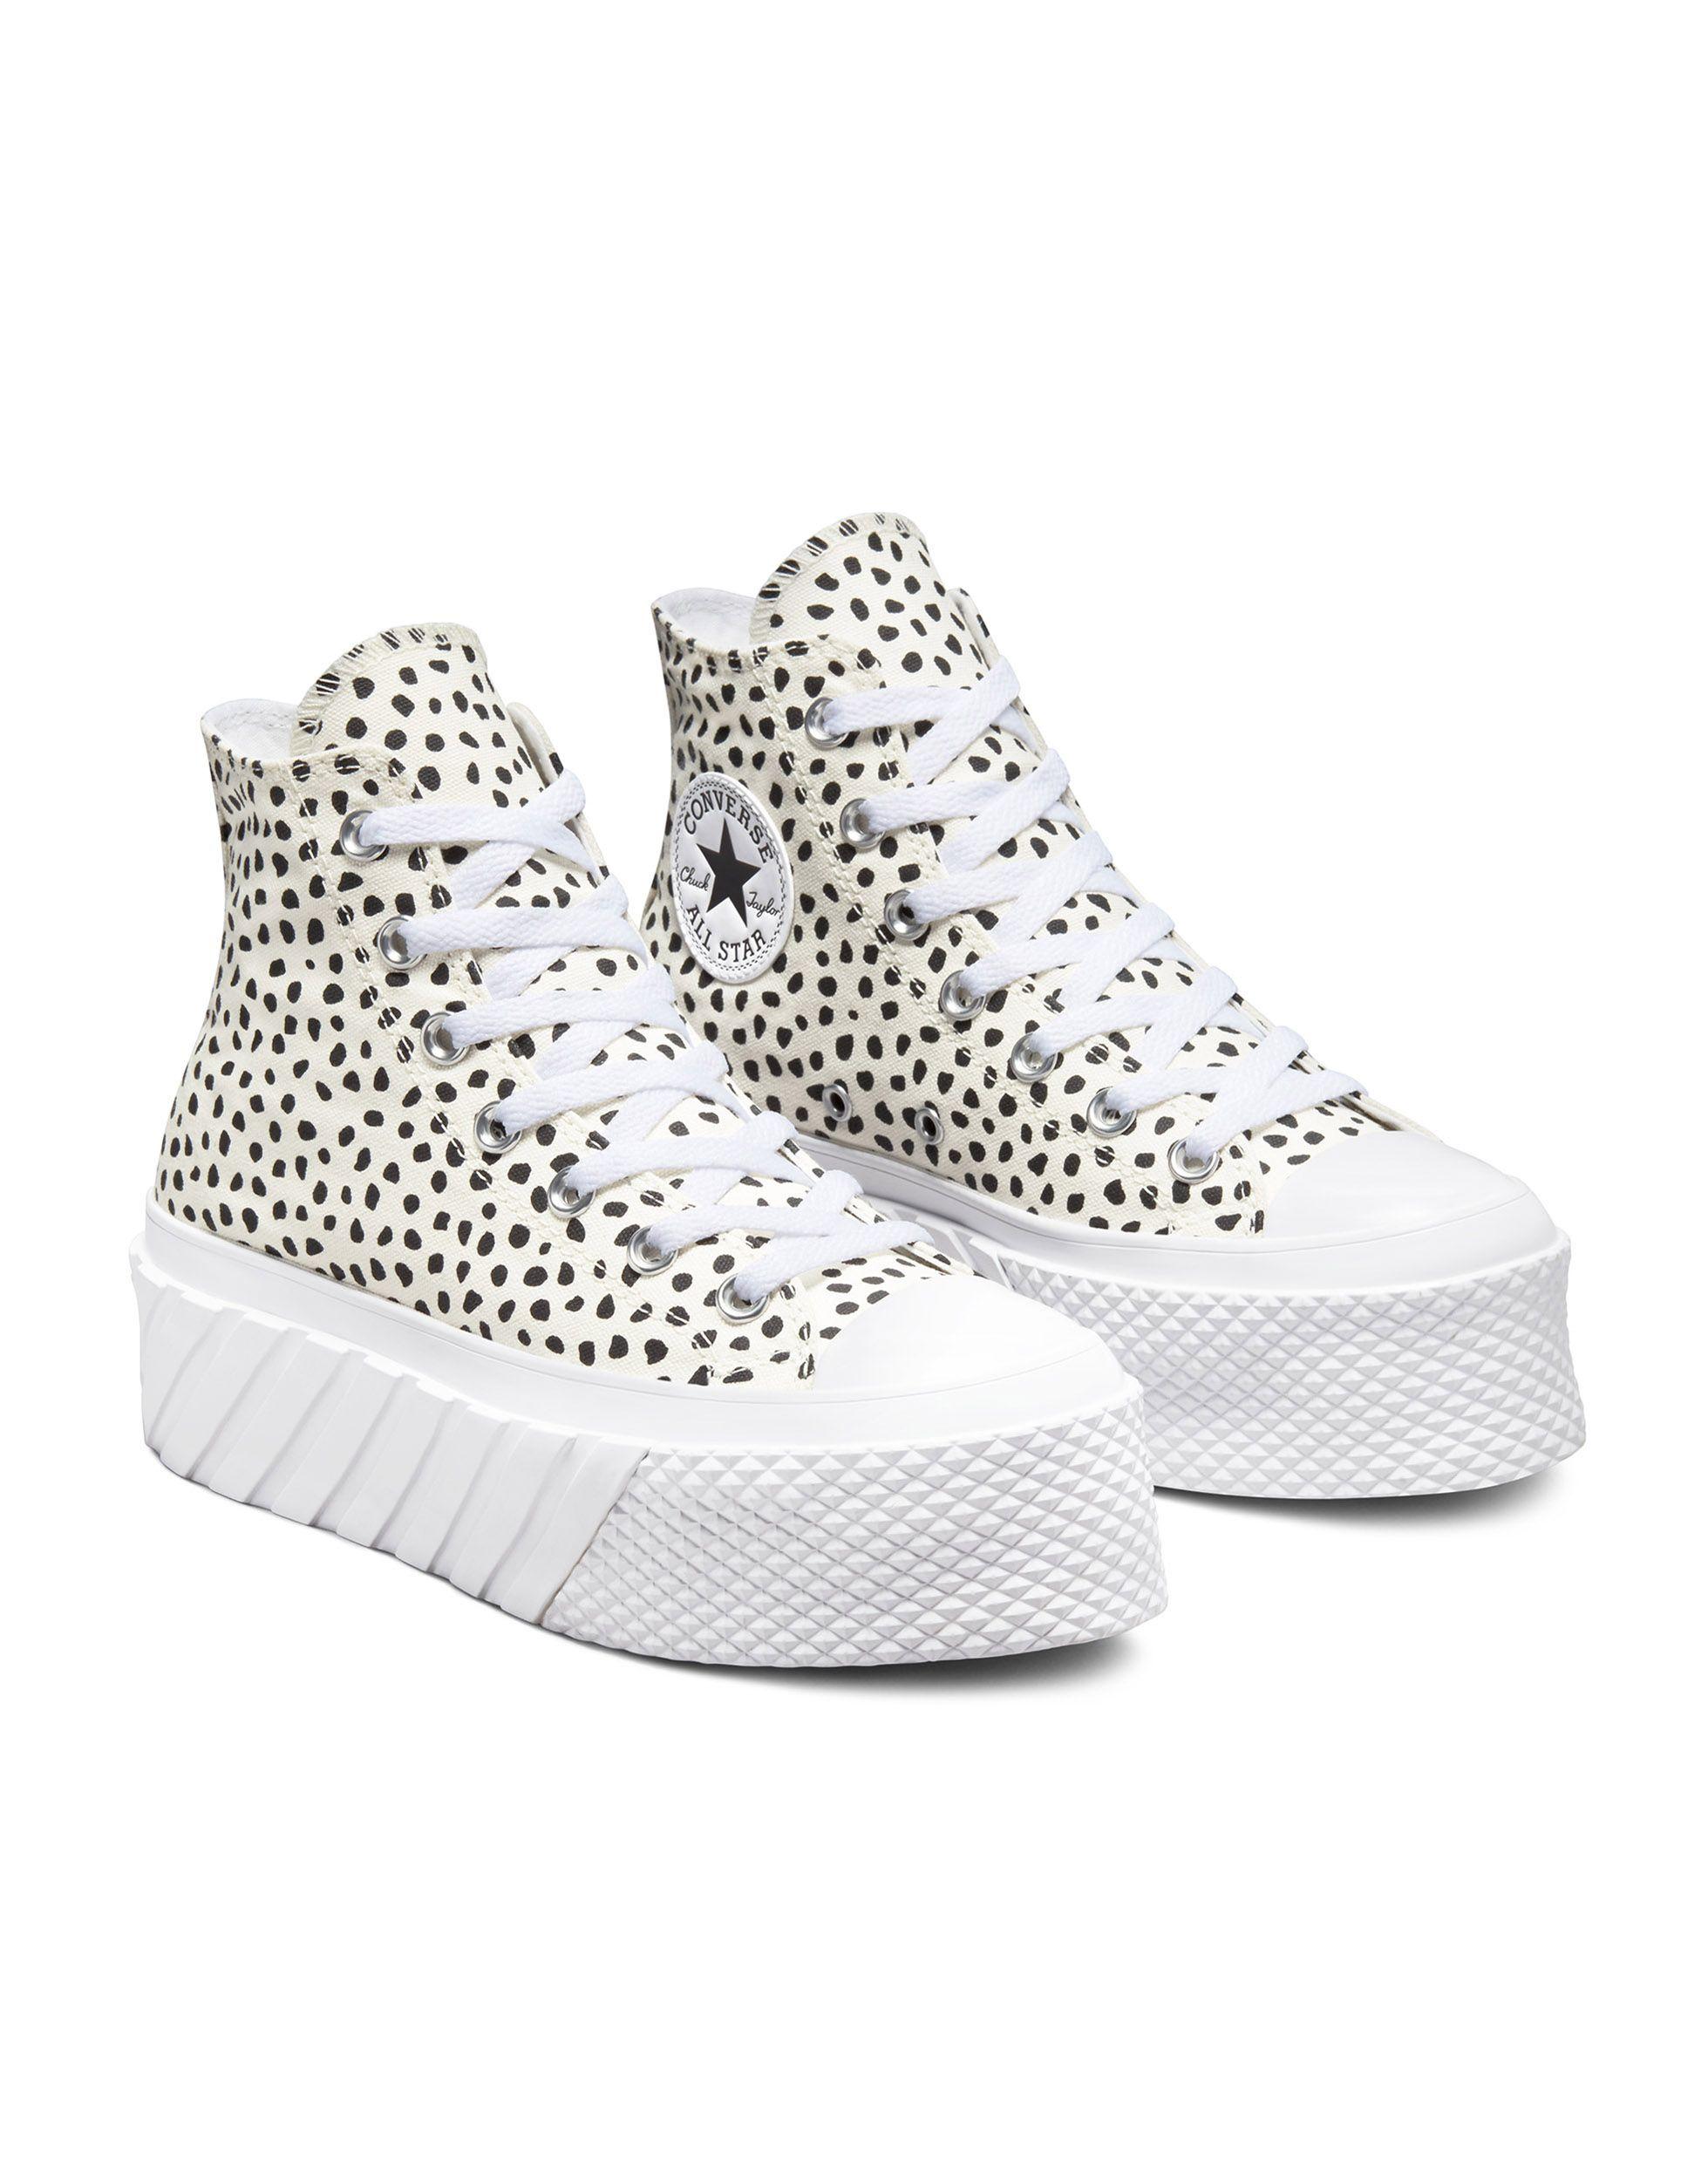 Virus schermutseling Kano Converse Chuck Taylor All Star Hi Lift 2x Animal Print Sneakers in White |  Lyst